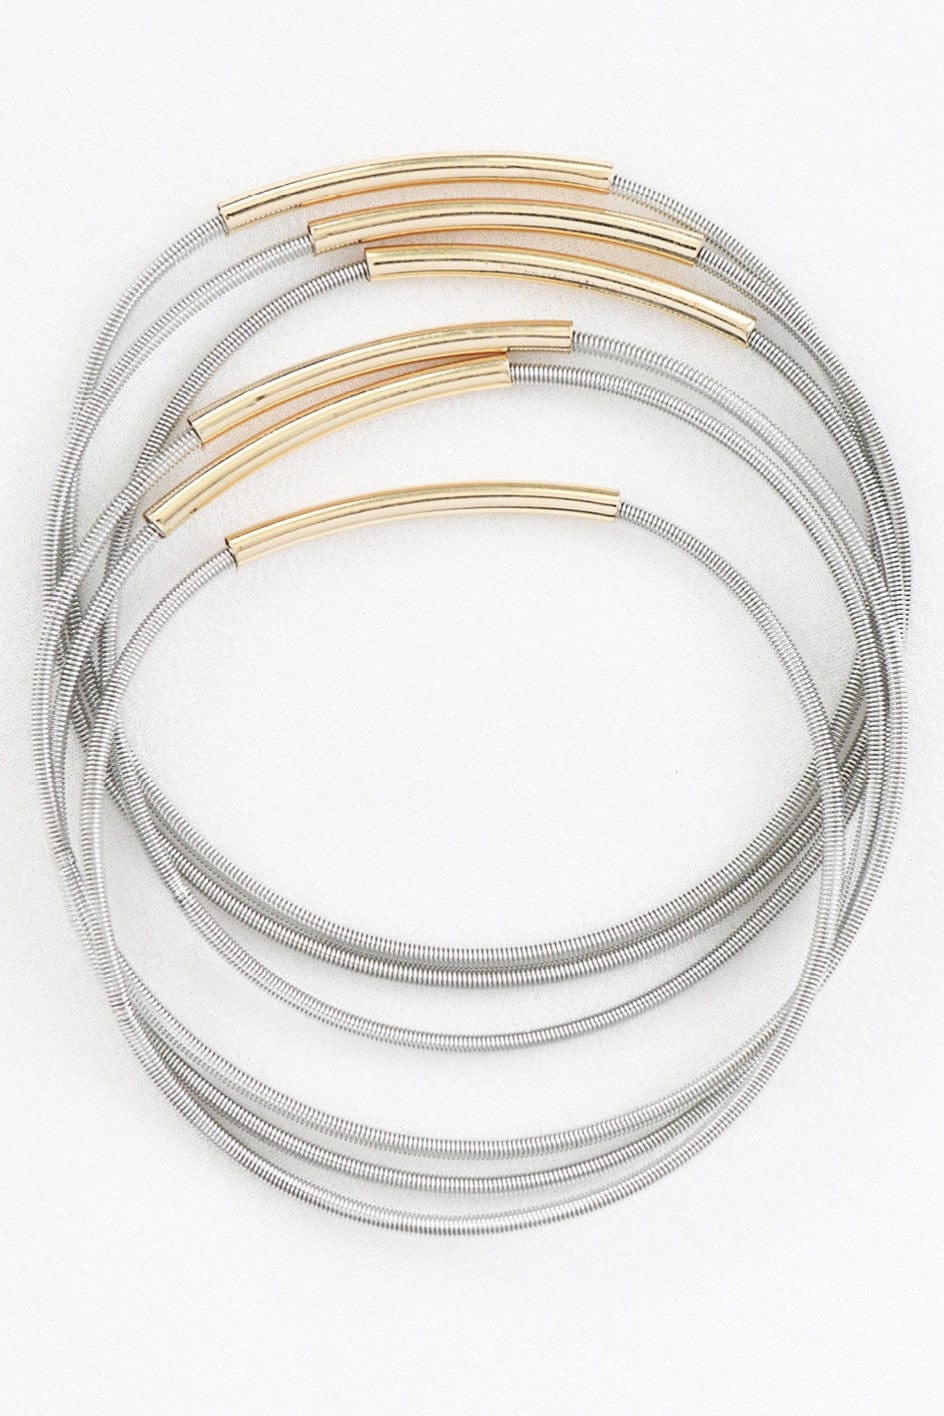 MIA ACCESSORIES Jewelry - Bracelets Stretchy Layered Guitar String Bracelet Set In Silver